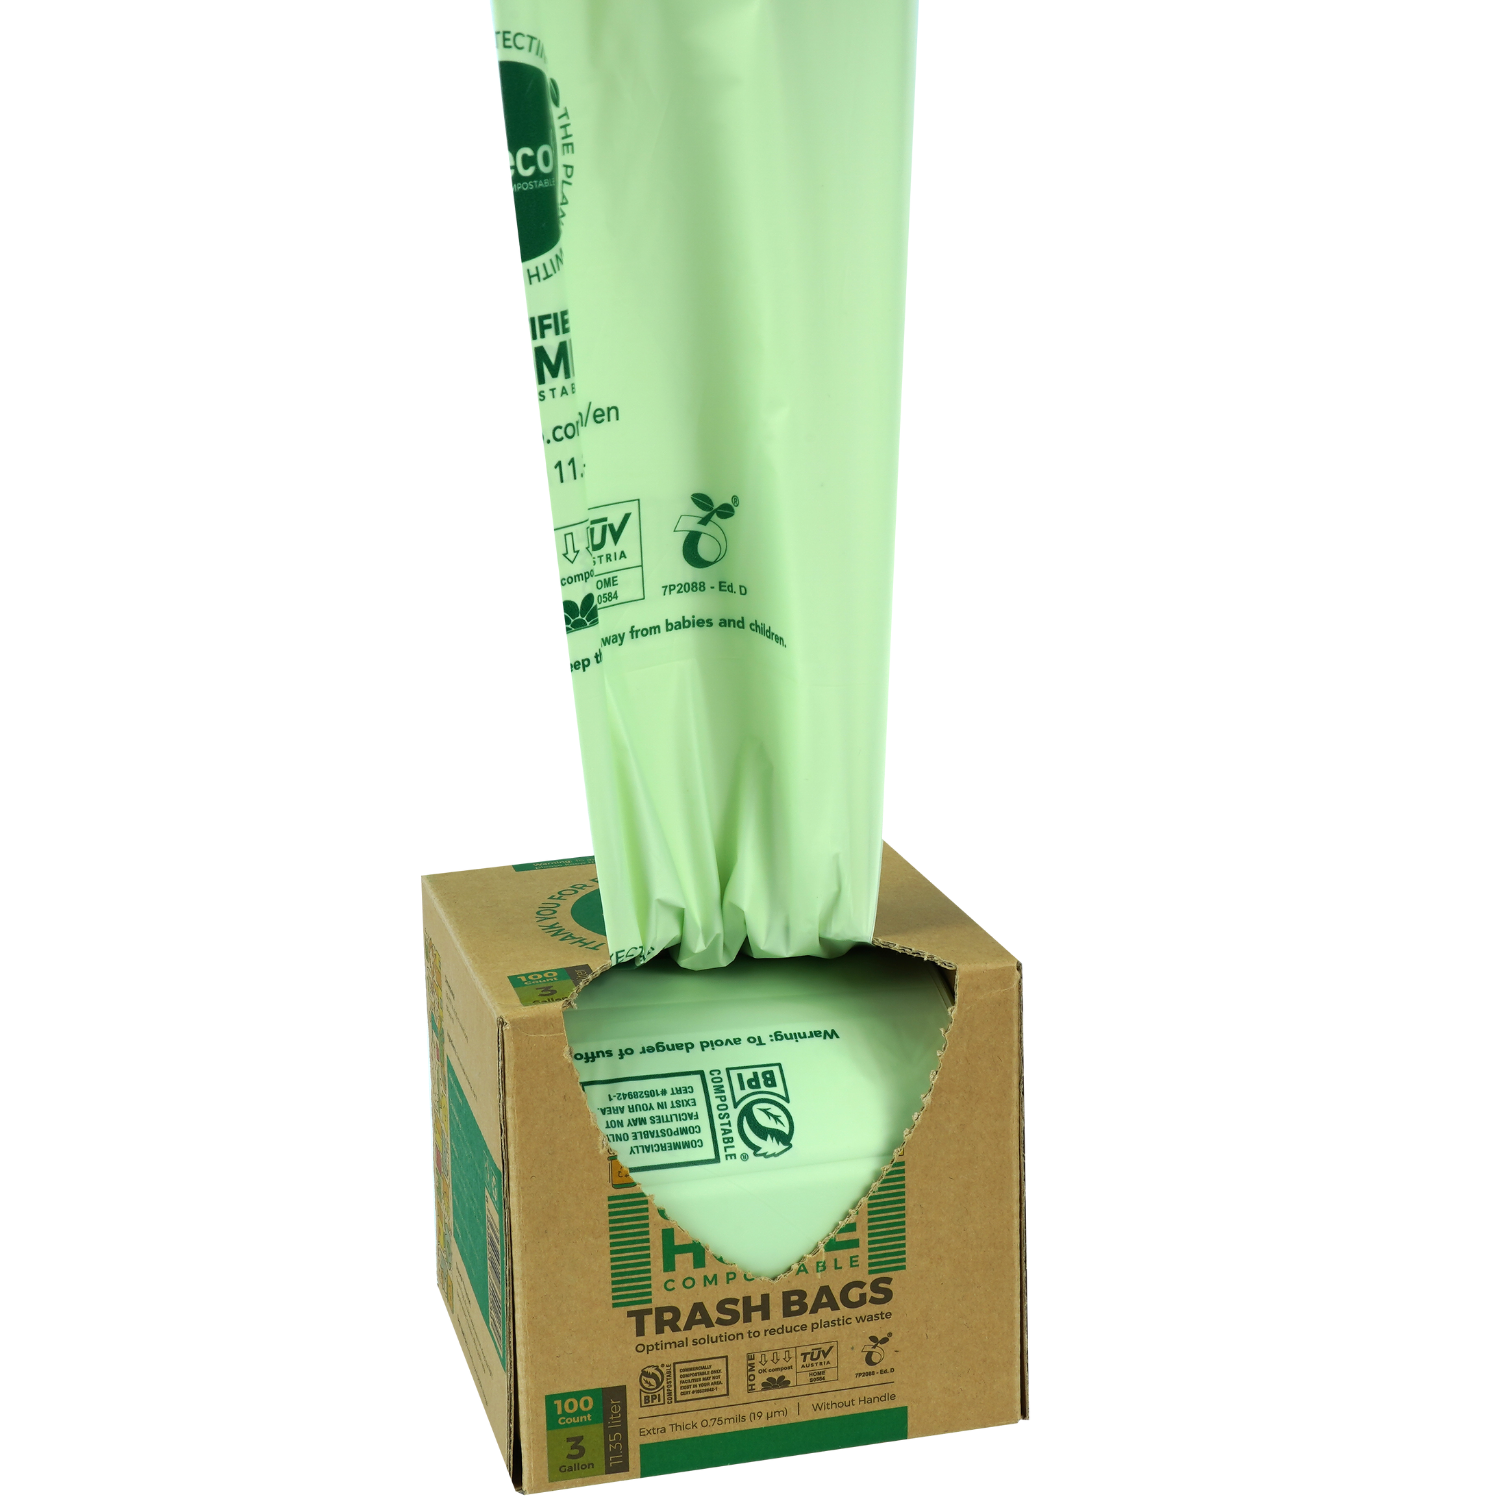 ANECO 100% Compostable Trash Bags 3 Gallon 100 Count Biodegradable Bag Extra Thick 0.75 Mils OK Compost Home BPI and TUV Certified 